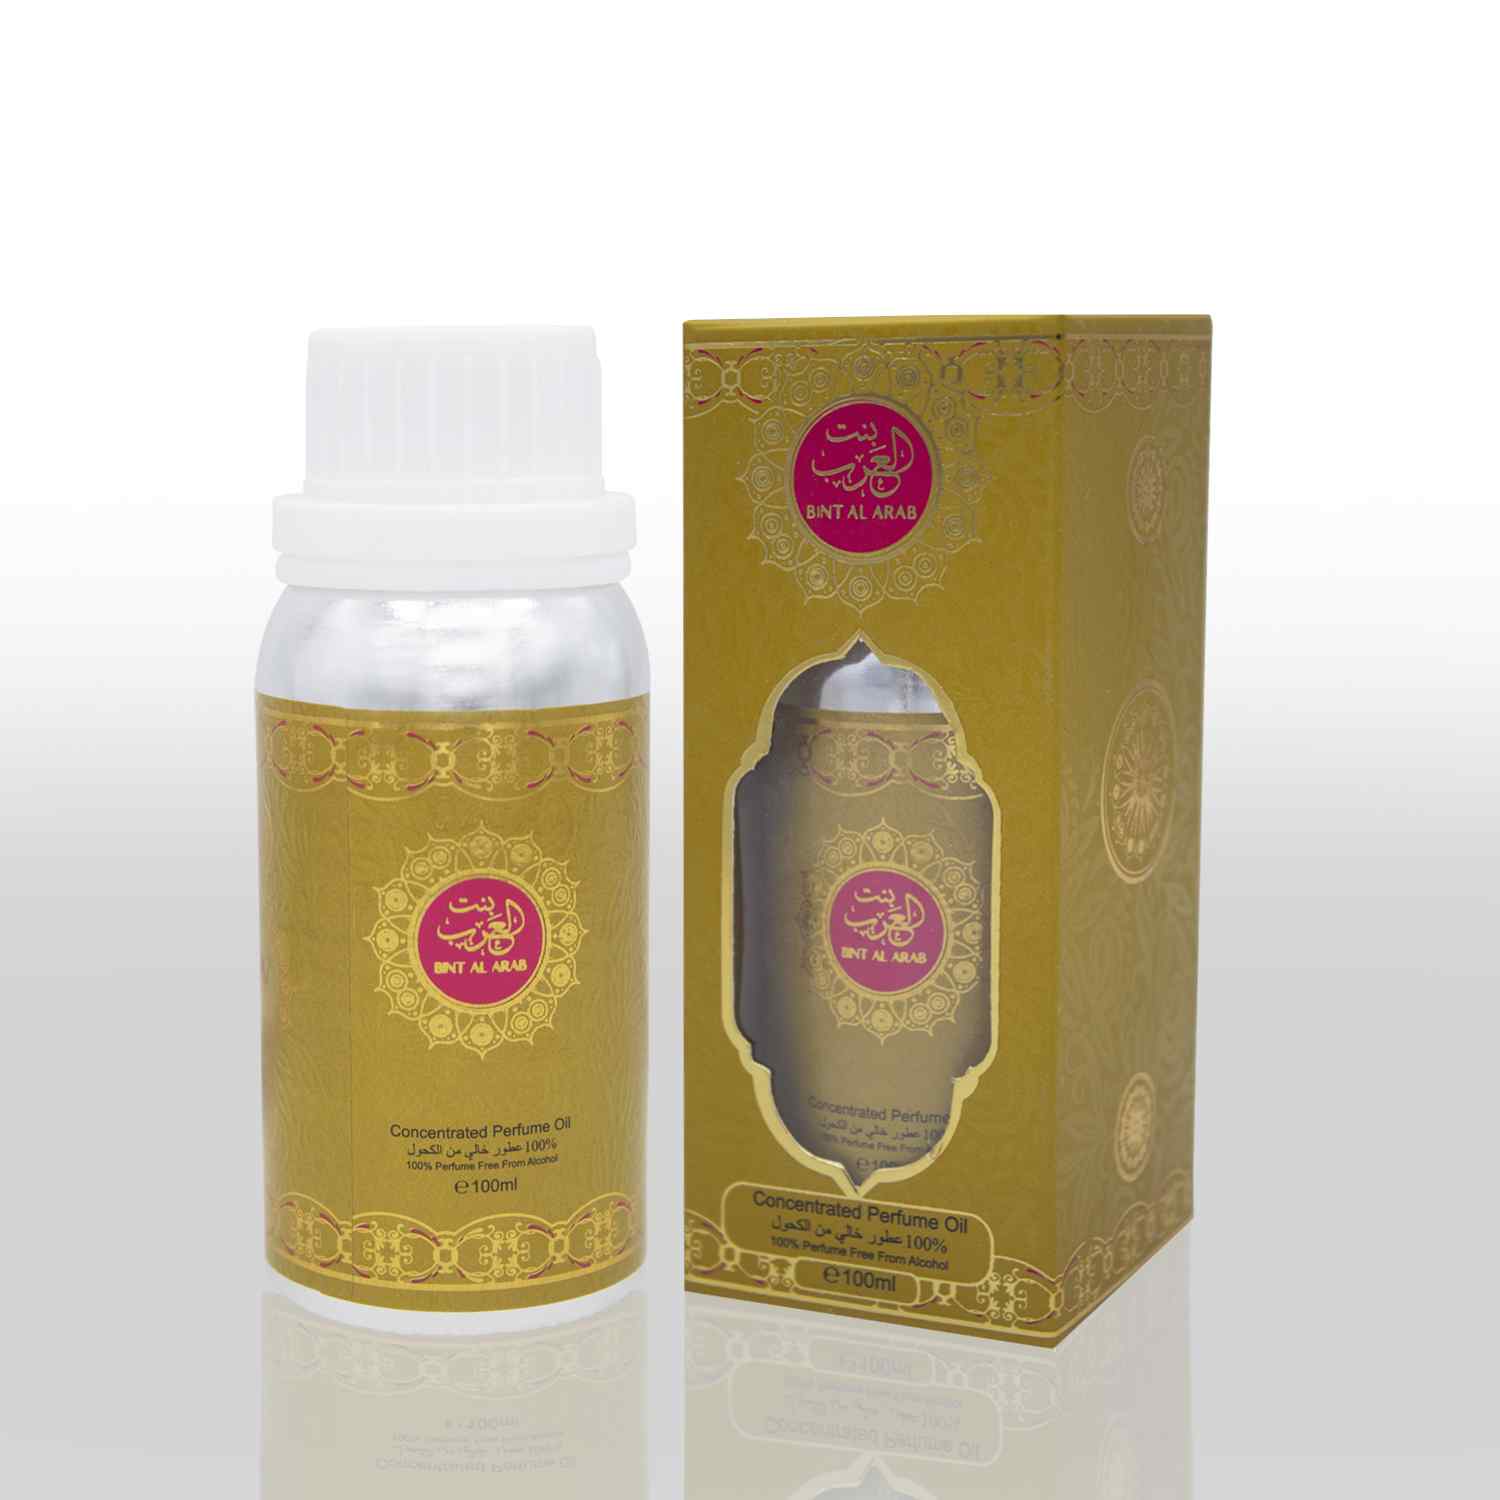 Bint Al Arab 100ML manufactured by ARD Perfumes